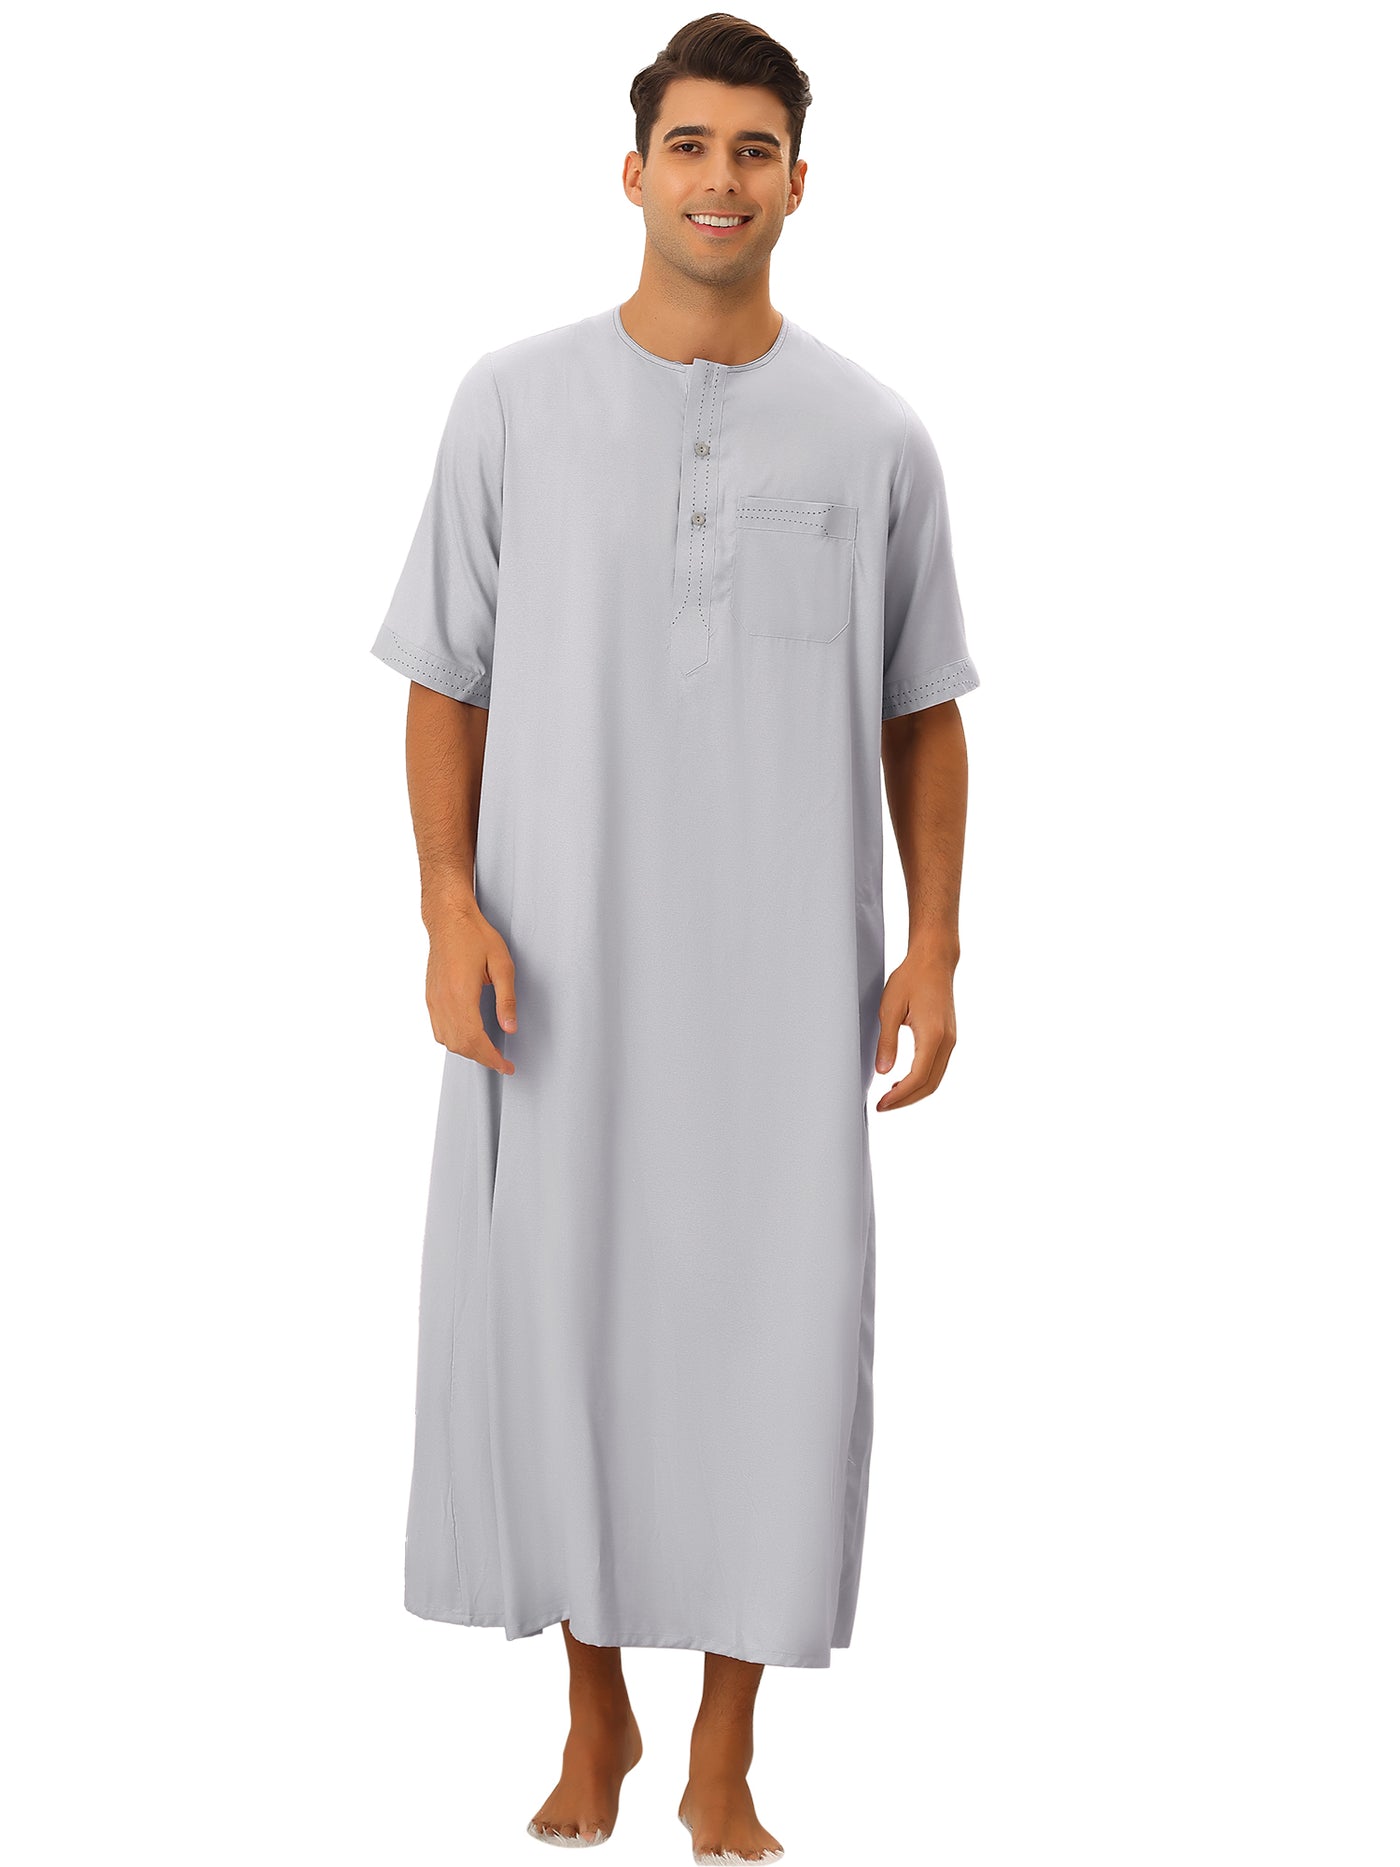 Bublédon Long Nightwear for Men's Loose Fit Short Sleeves Solid Loungewear Pajamas Gown